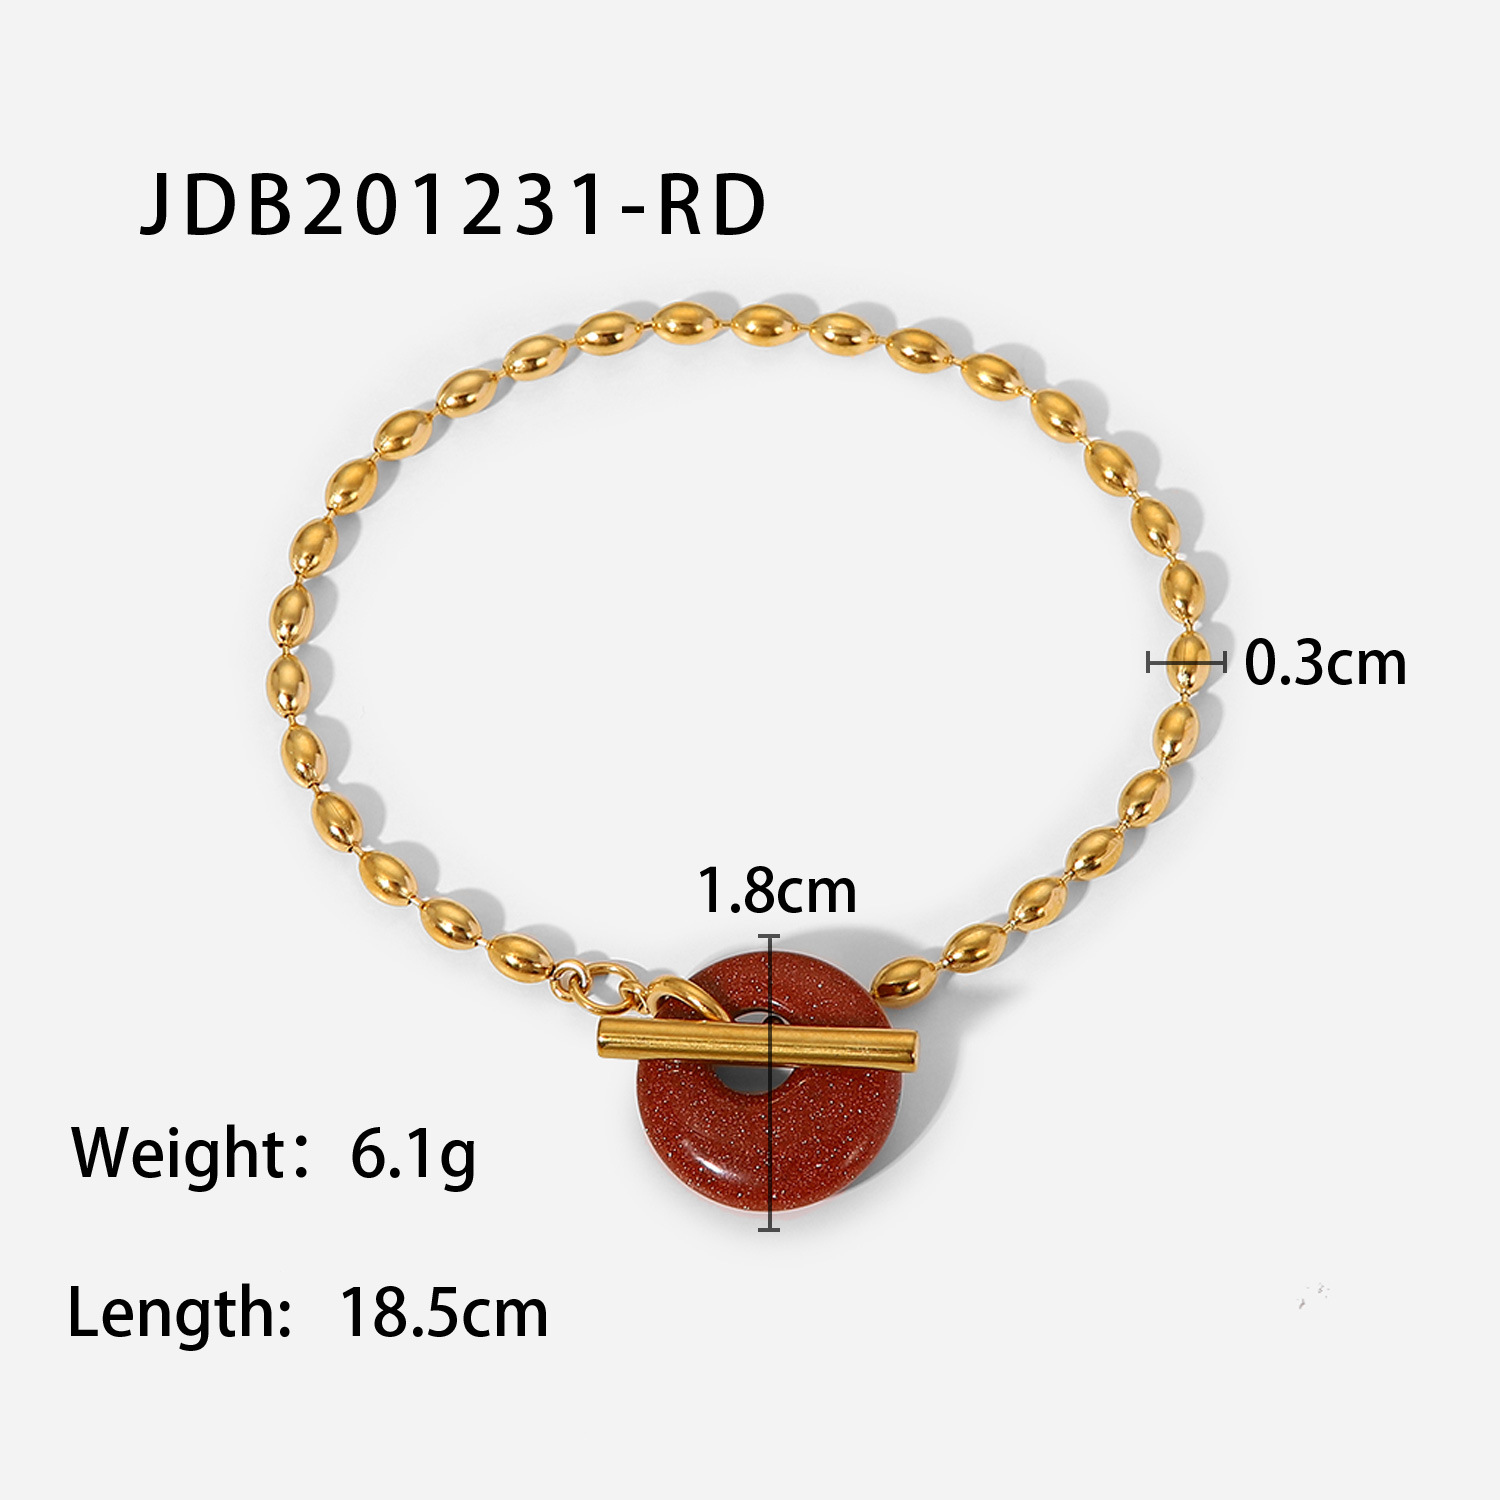 JDB201231-RD